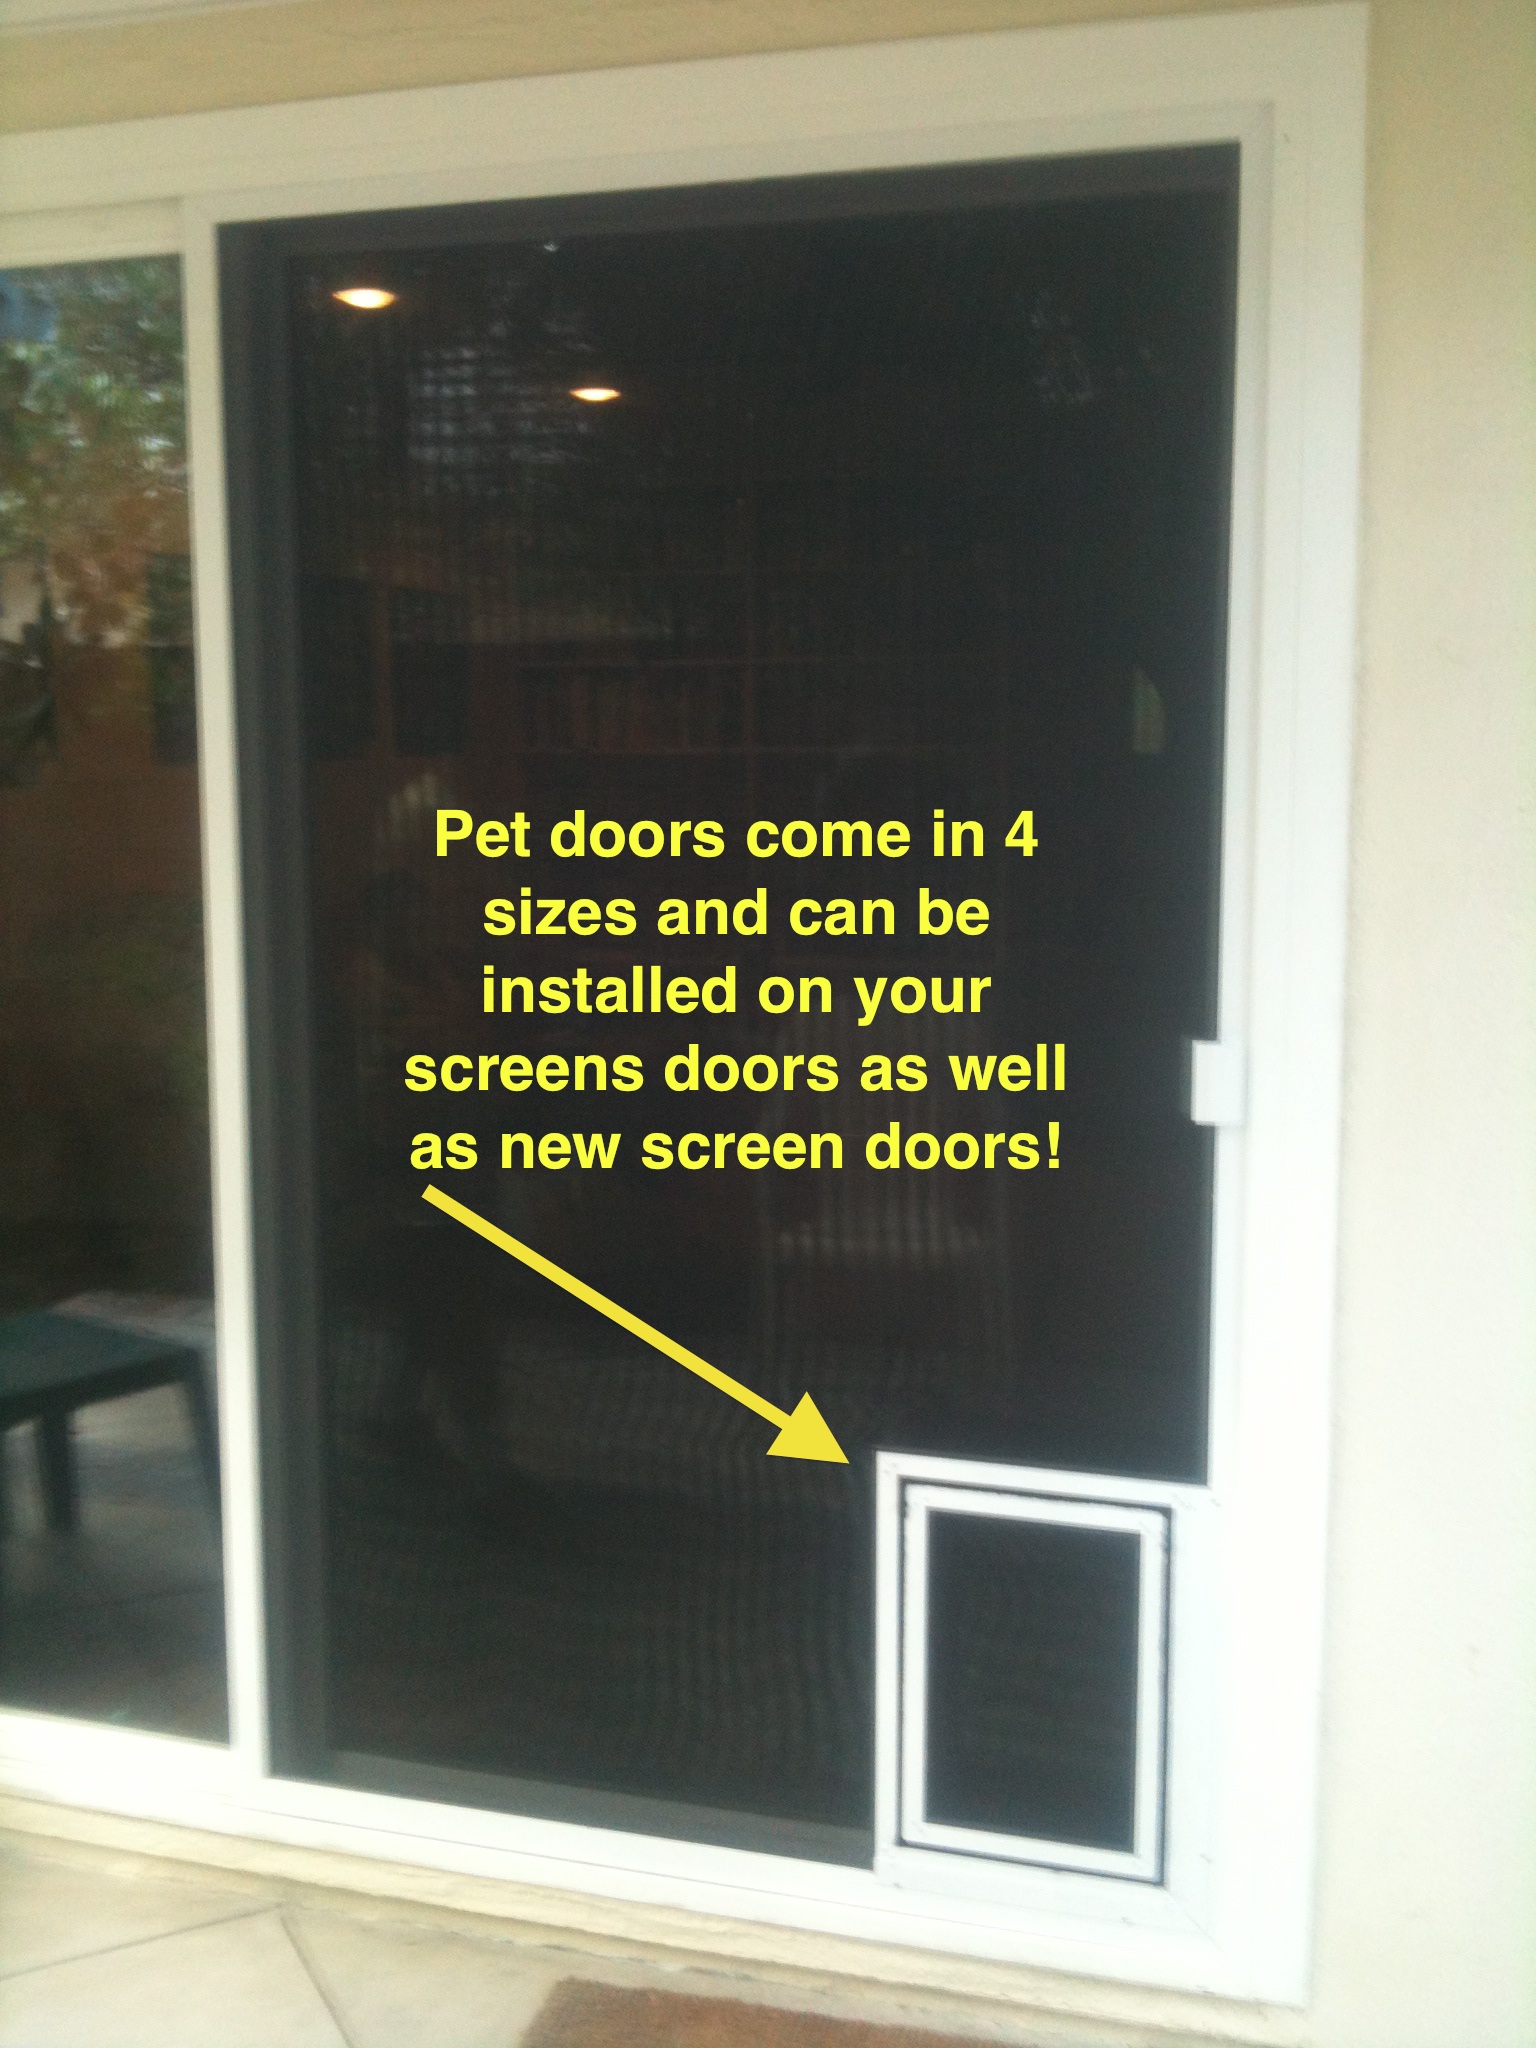 locks on screen doors. For large windows and glass sliding doors, dog ...